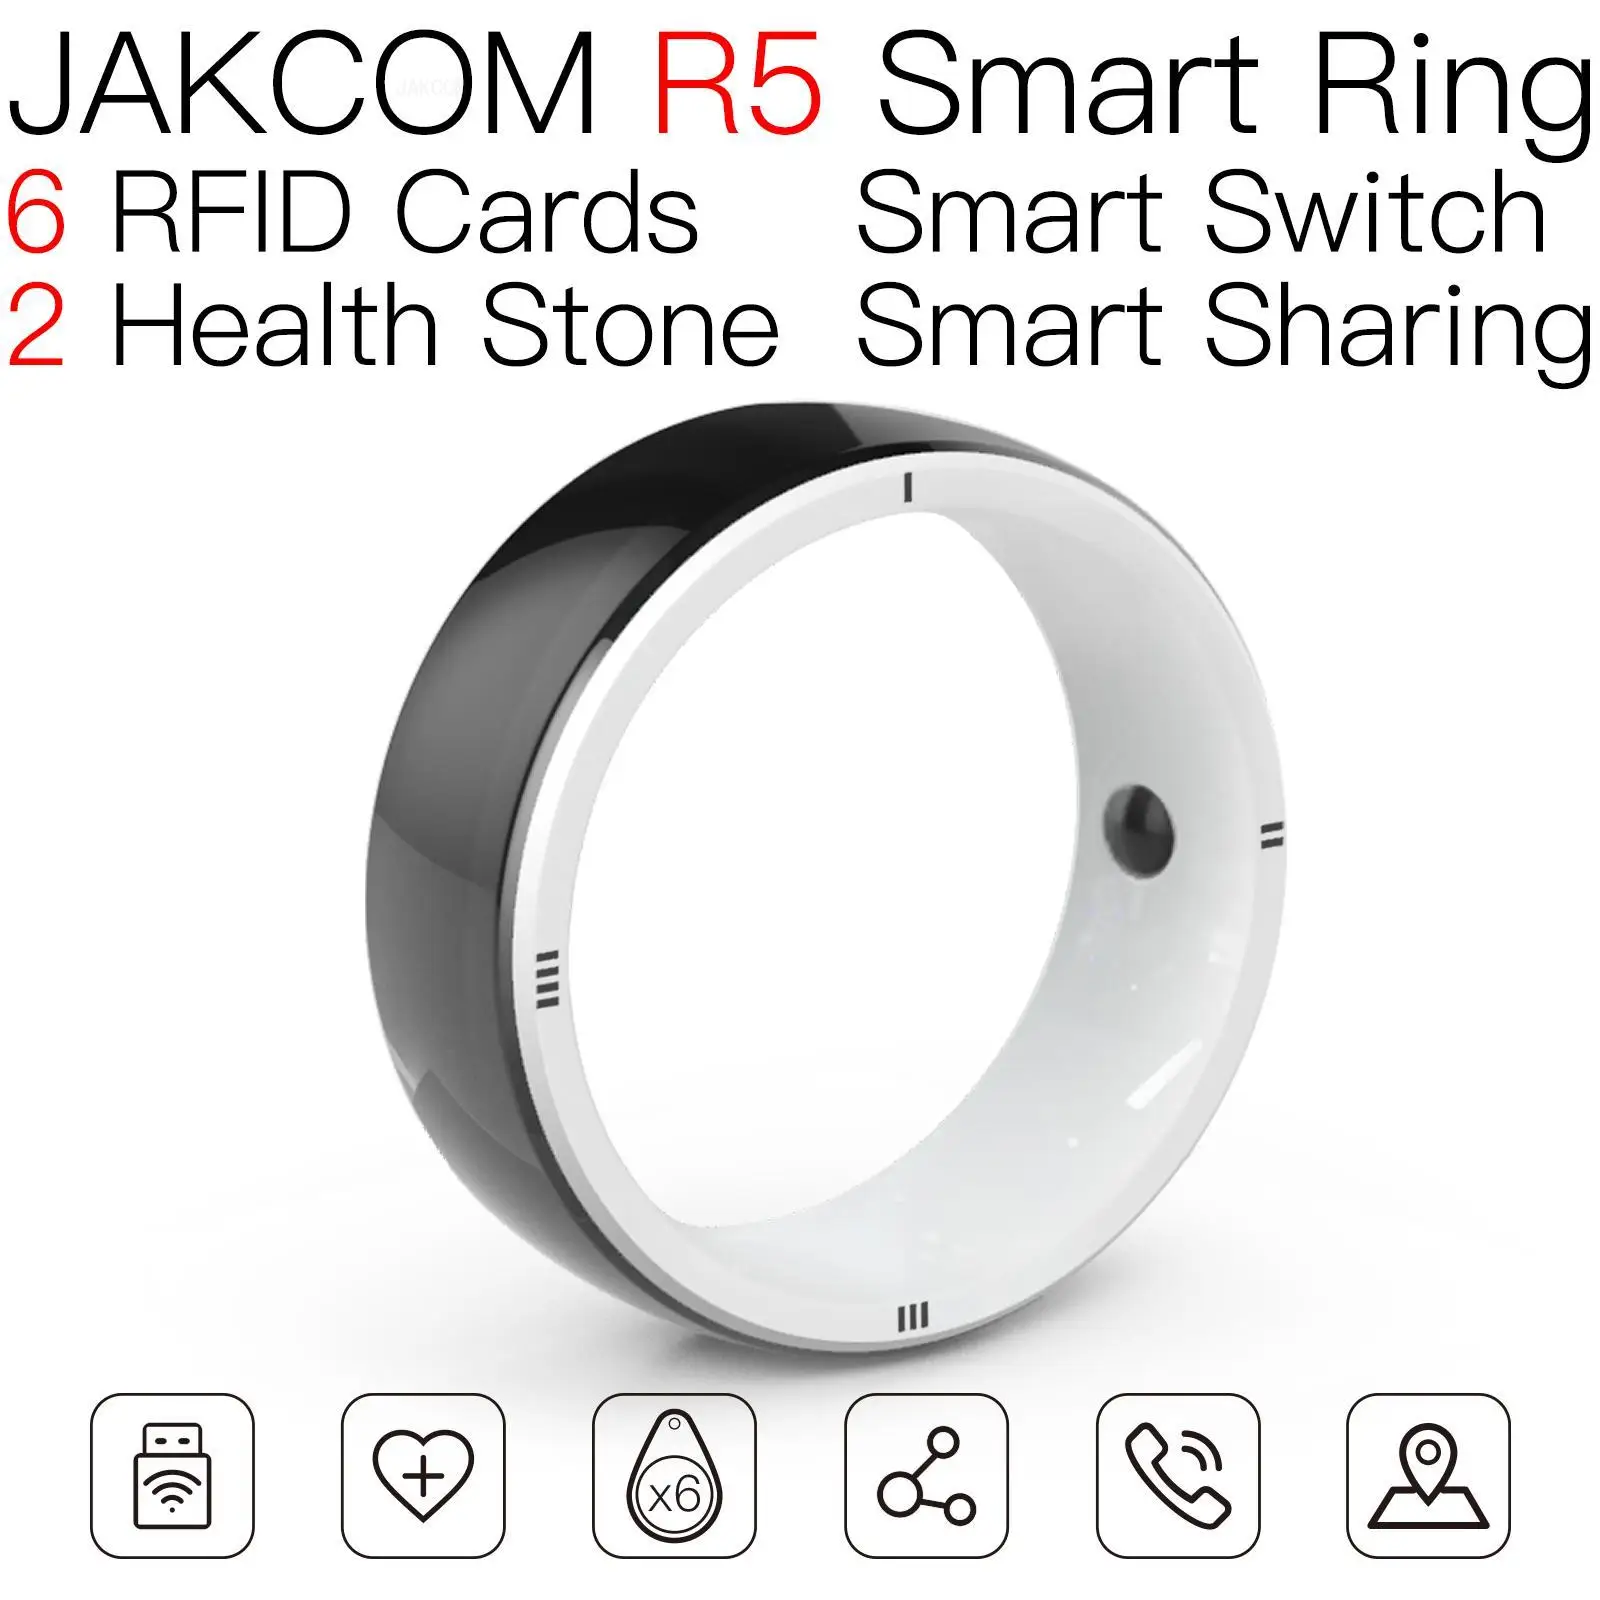 

JAKCOM R5 Smart Ring Match to signal blocking tablet uhf rfid tag atex laundry tagging smart card 125khz carte nfc new horizon